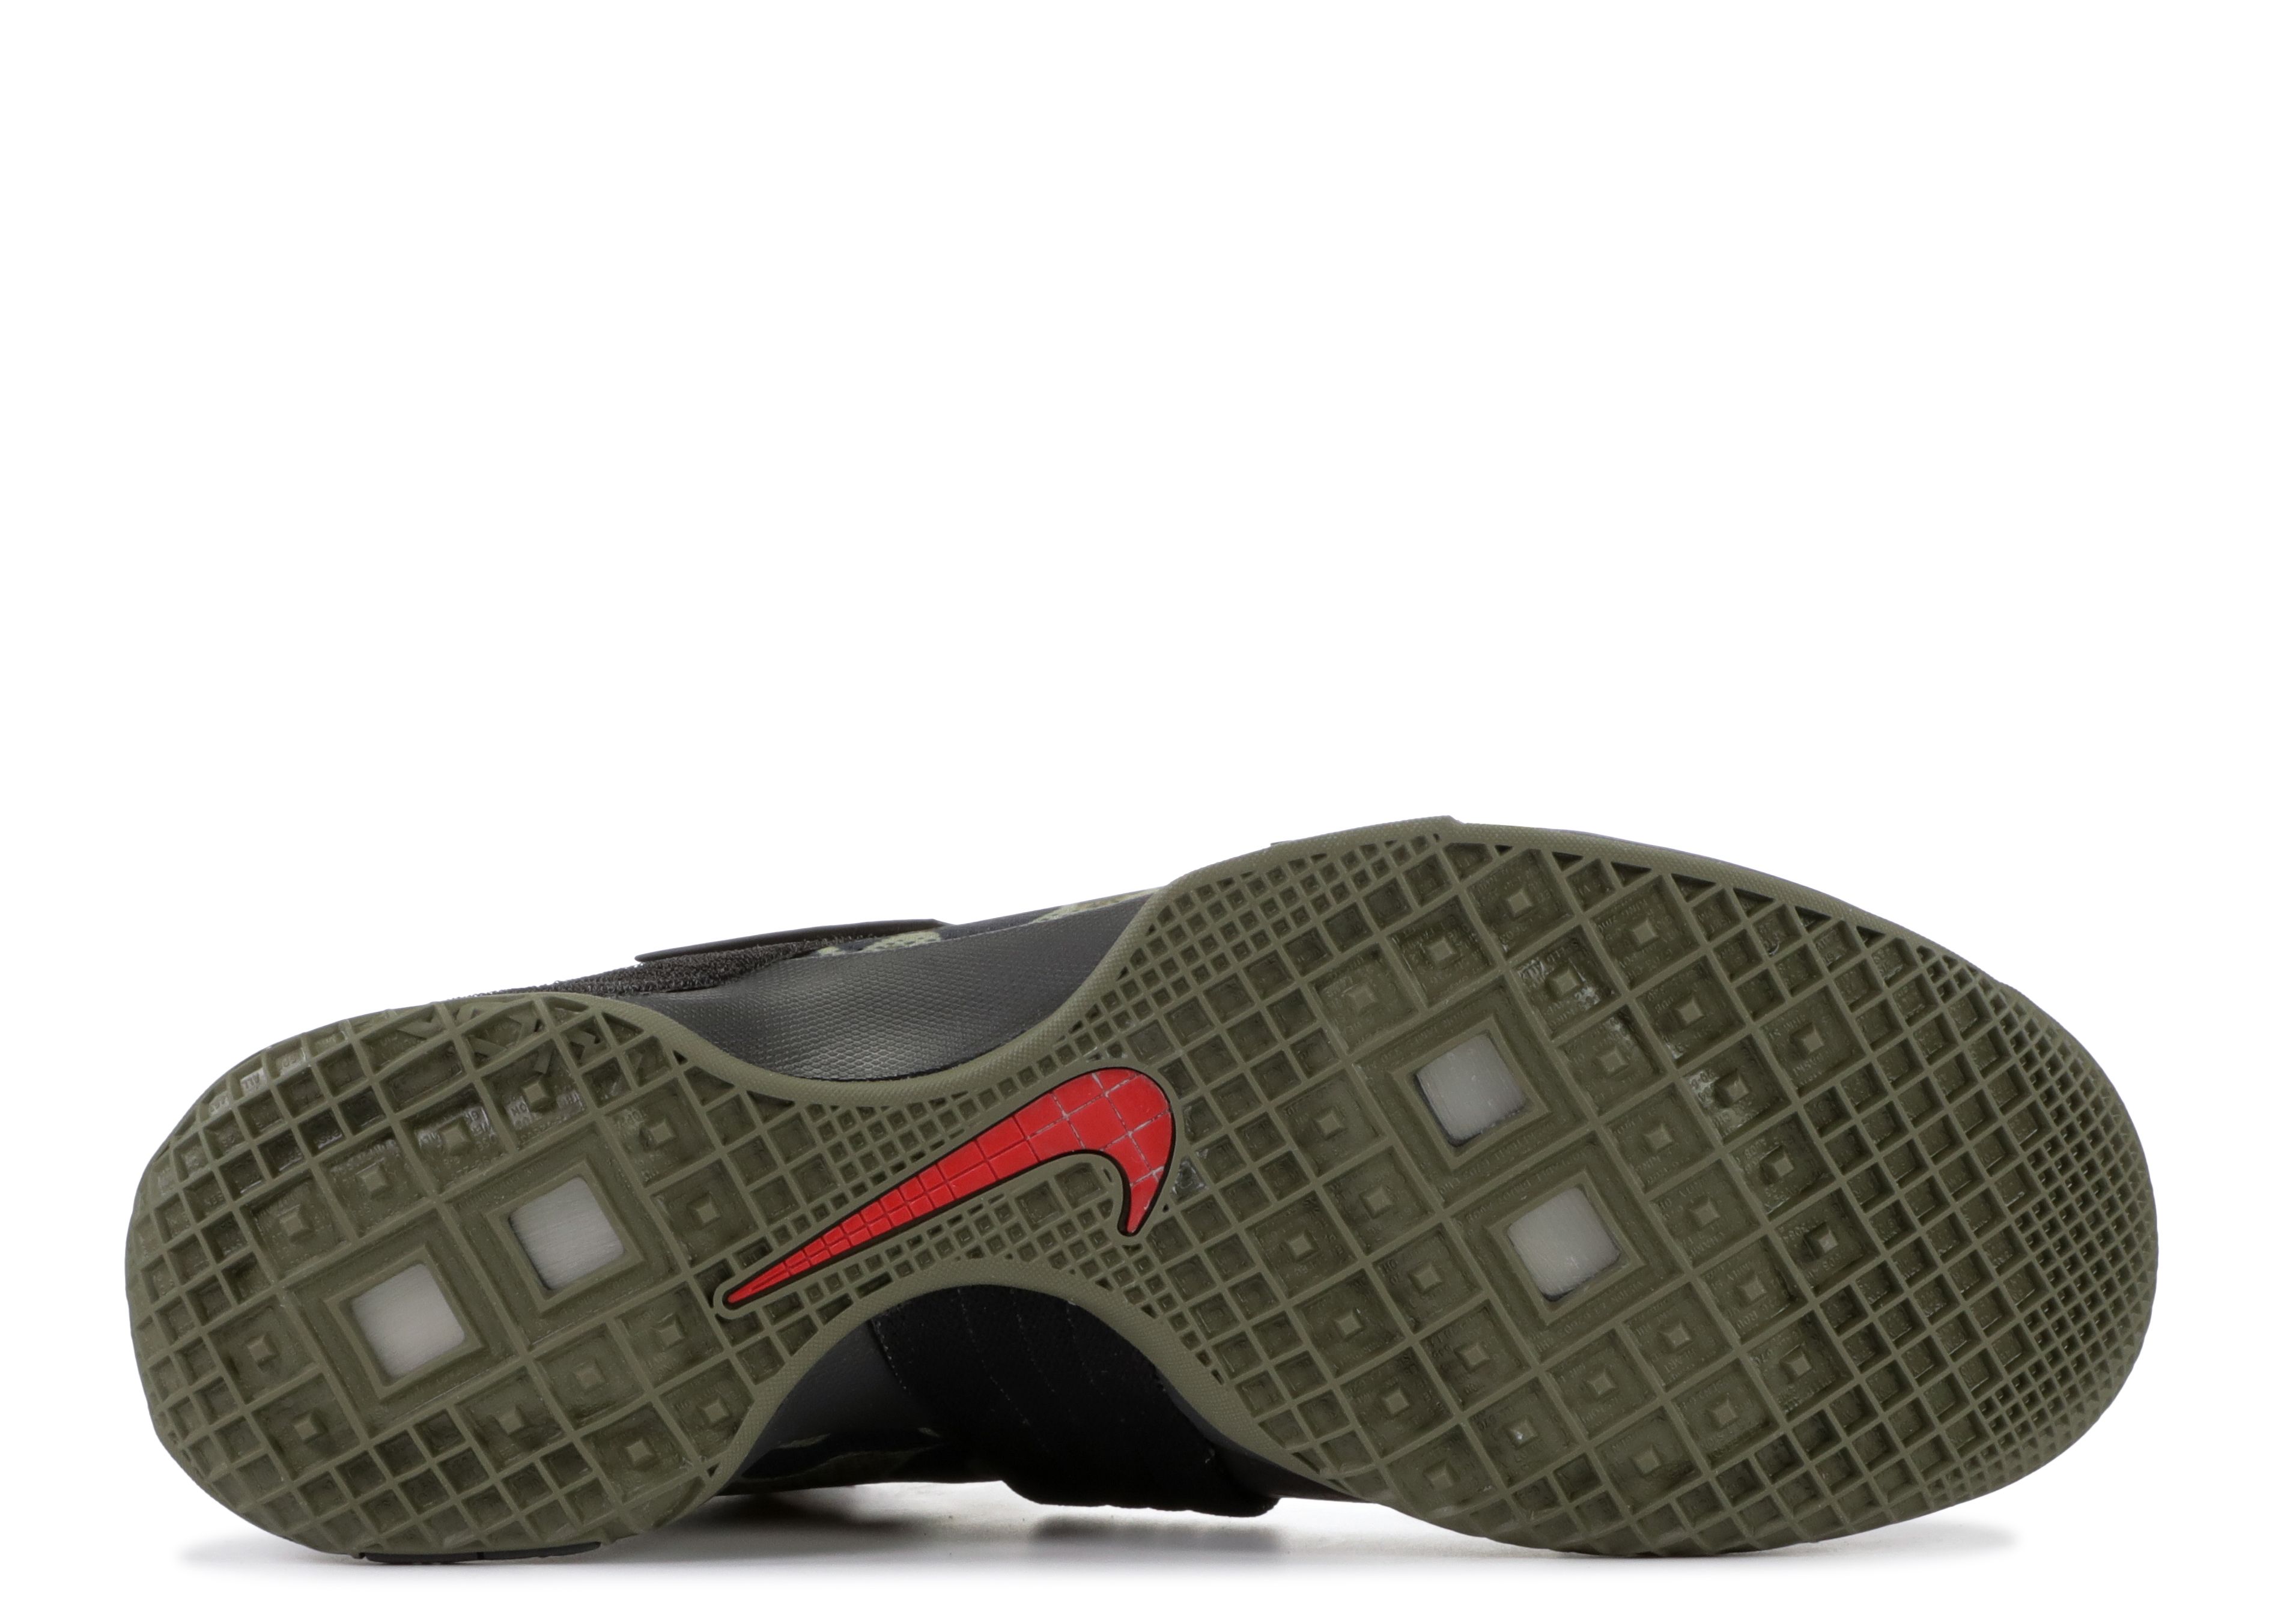 Zoom LeBron Soldier 10 'Camo' - Nike - 844378 022 - black/medium 